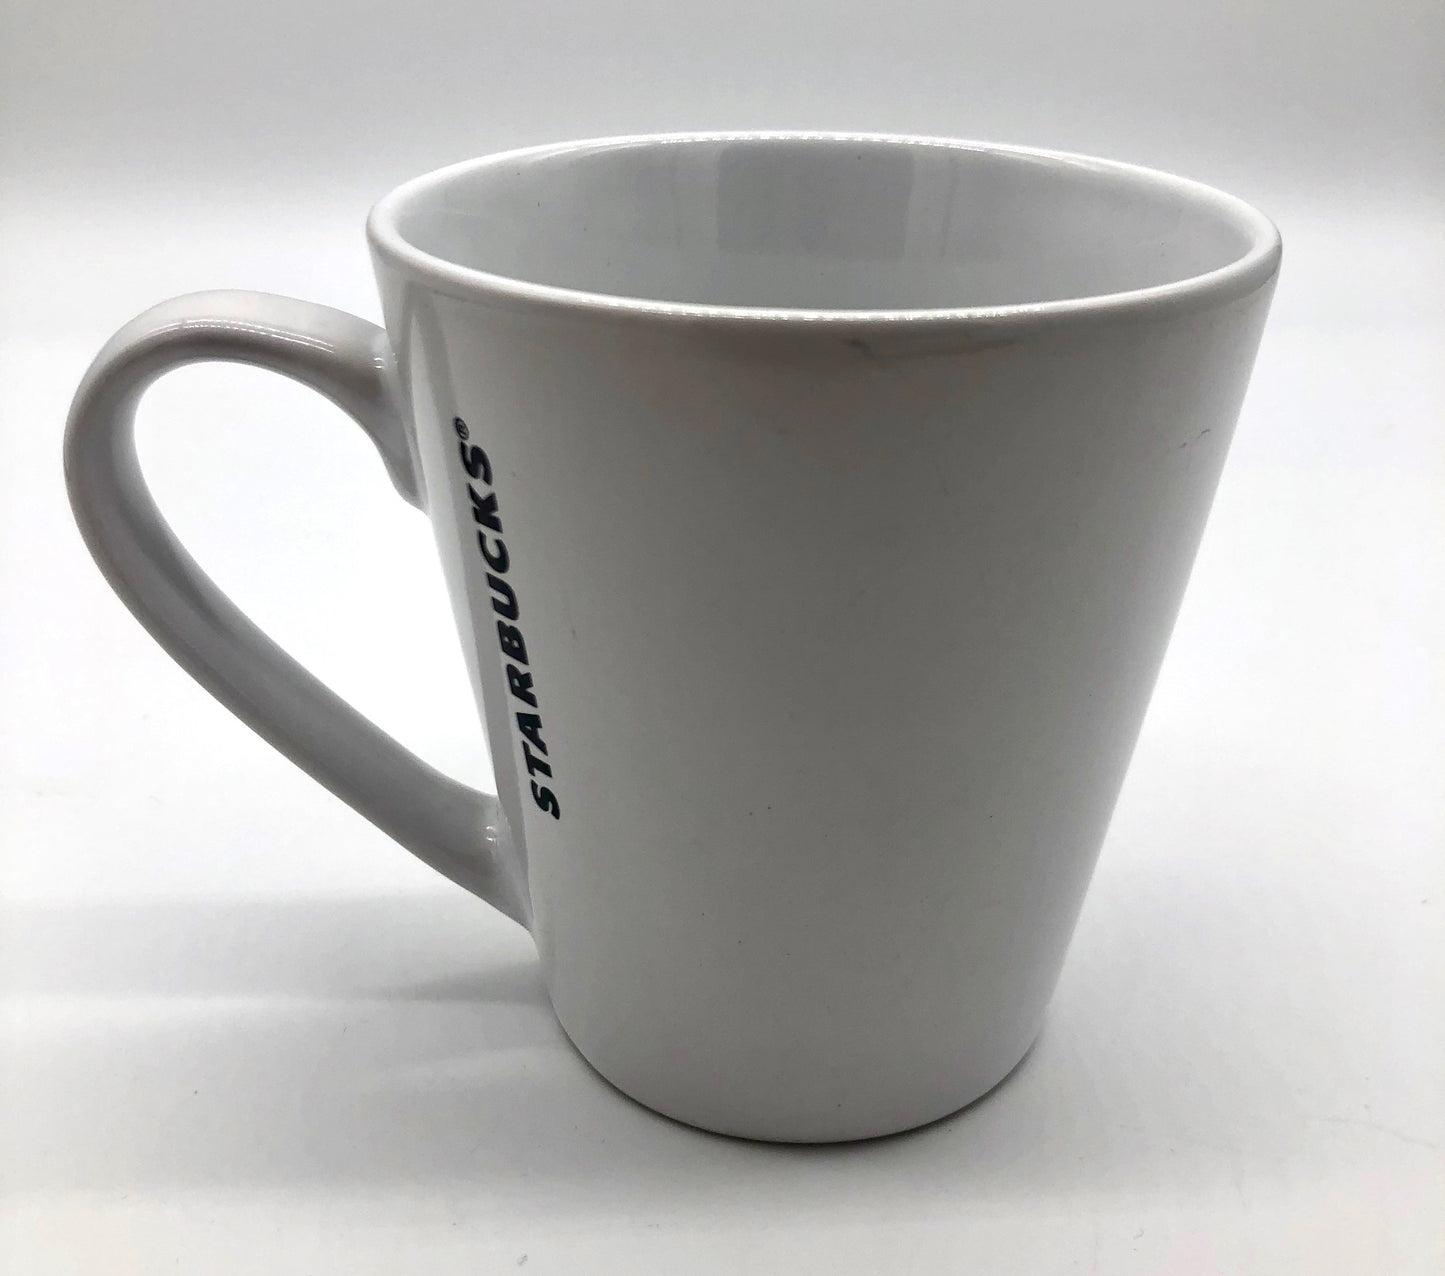 2015 Collector STARBUCKS Coffee Cup Green Logo Tail Up Mermaid Mug –